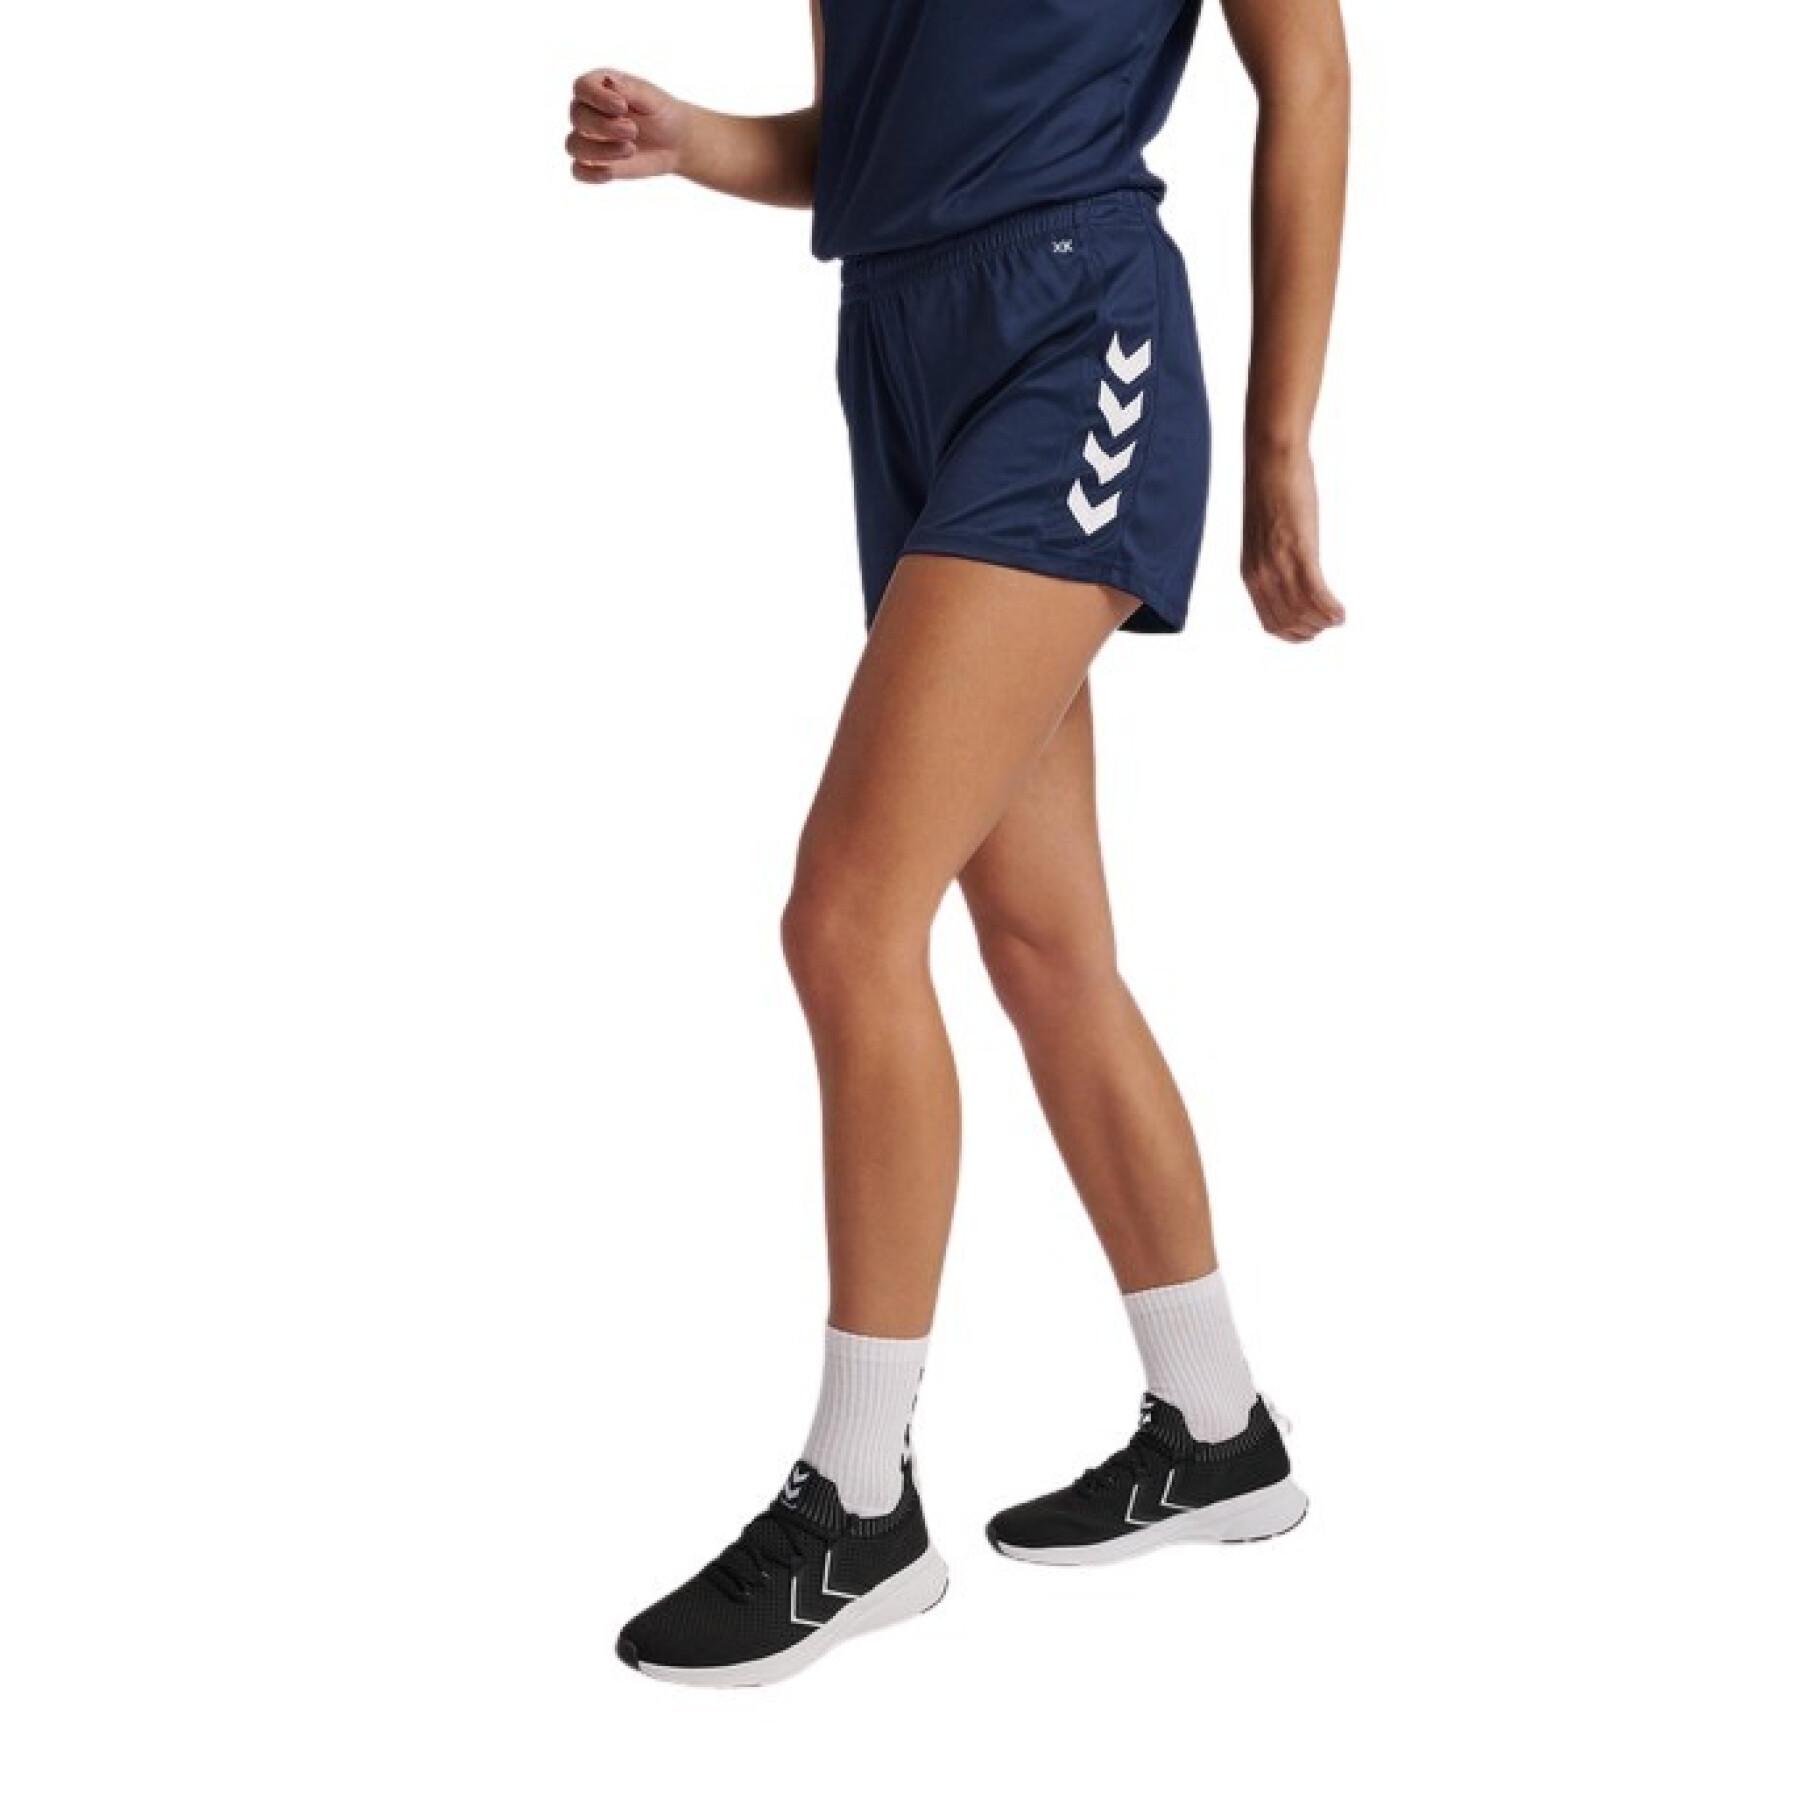 Women's shorts Hummel Shorts Textile - Volleyball wear